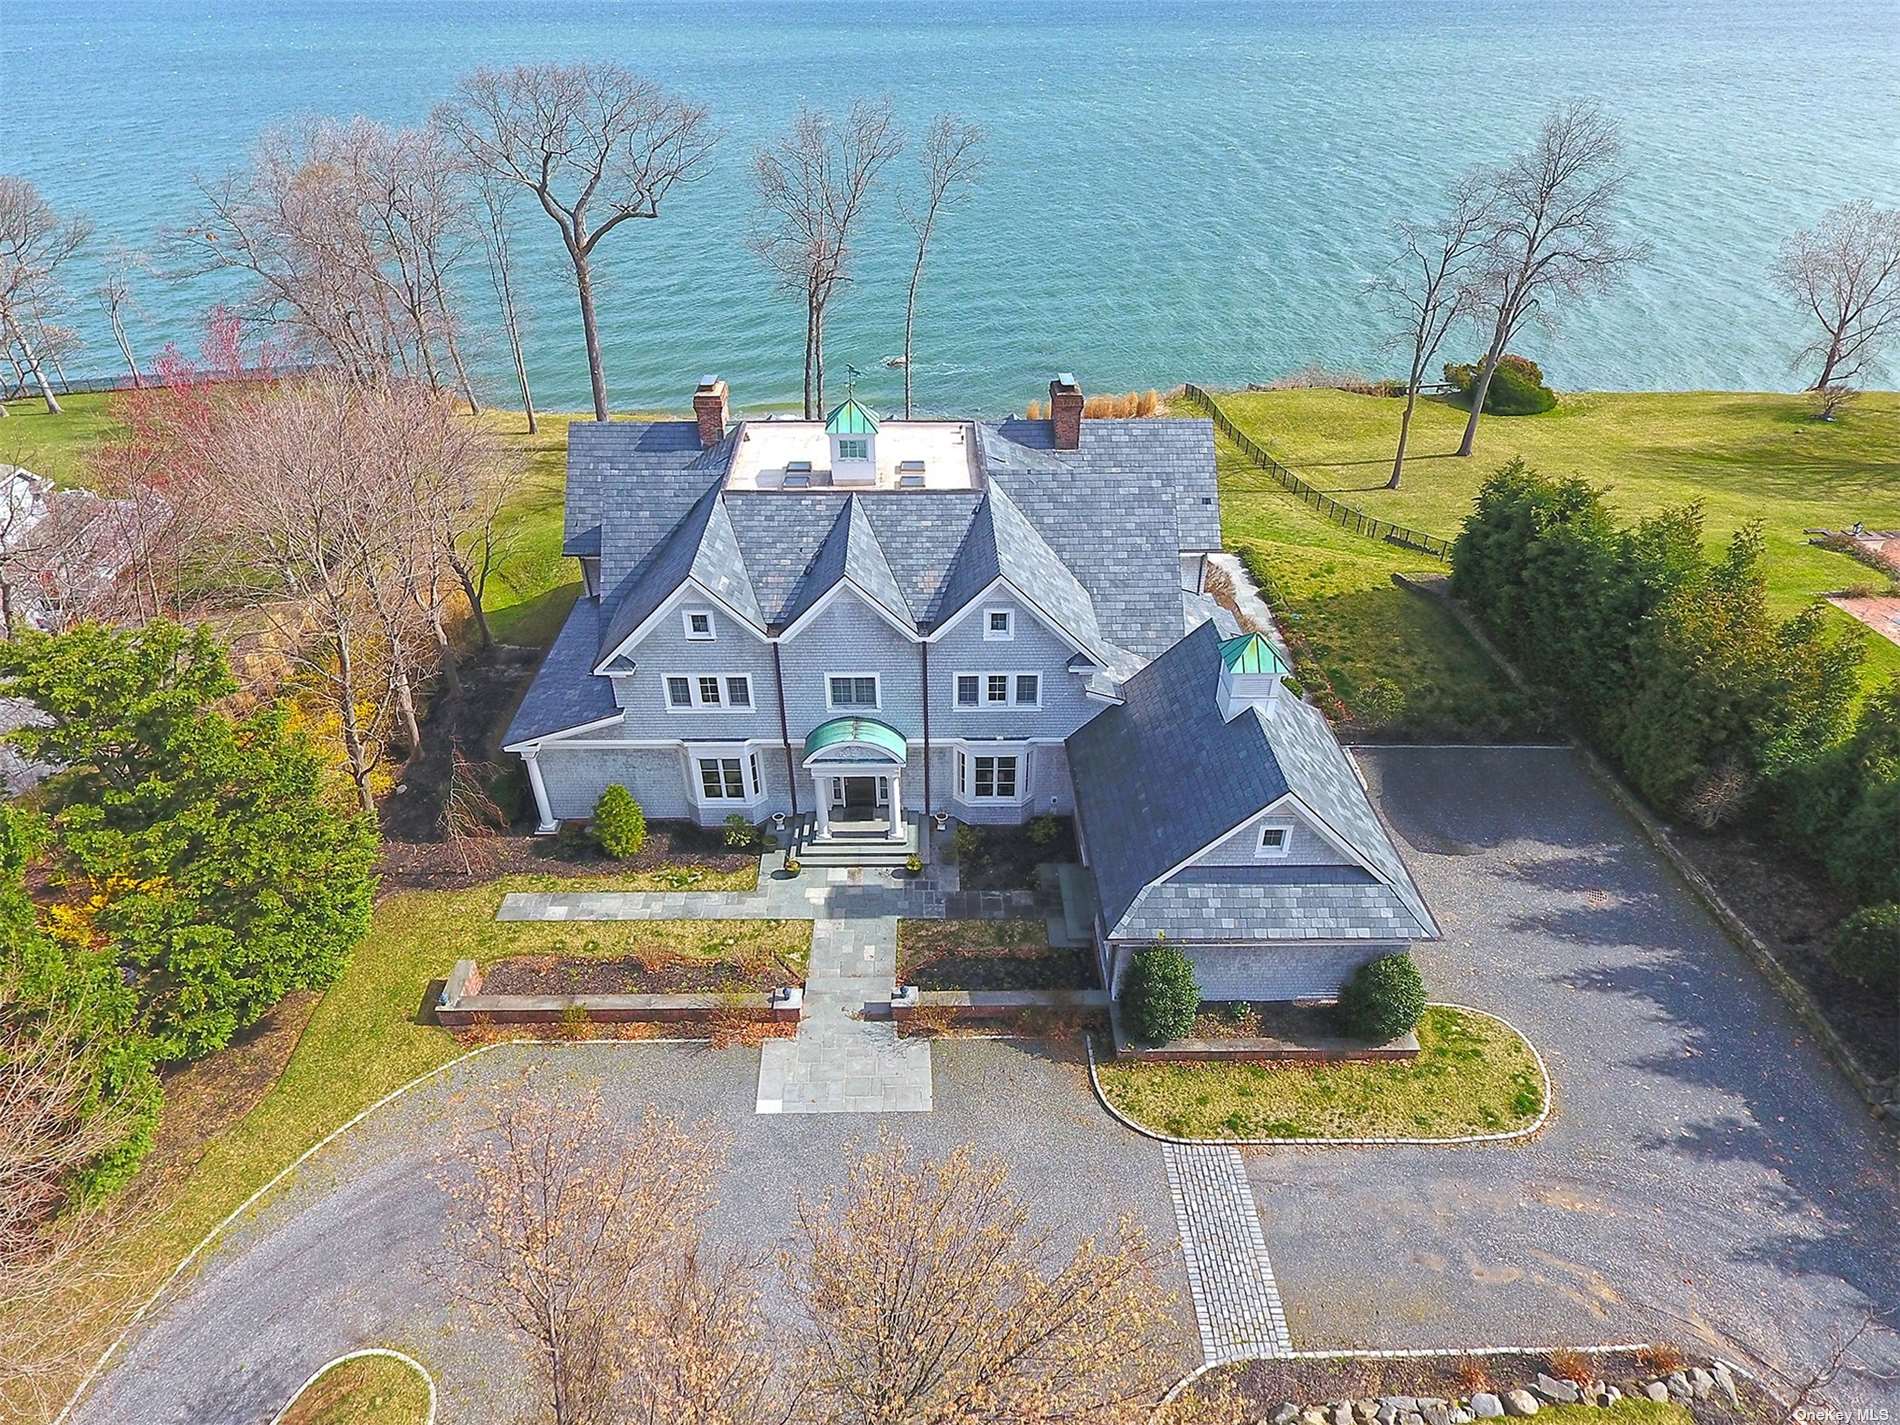 Property for Sale at 7 Sea Drive, Lloyd Harbor, Hamptons, NY - Bedrooms: 7 
Bathrooms: 5  - $5,500,000